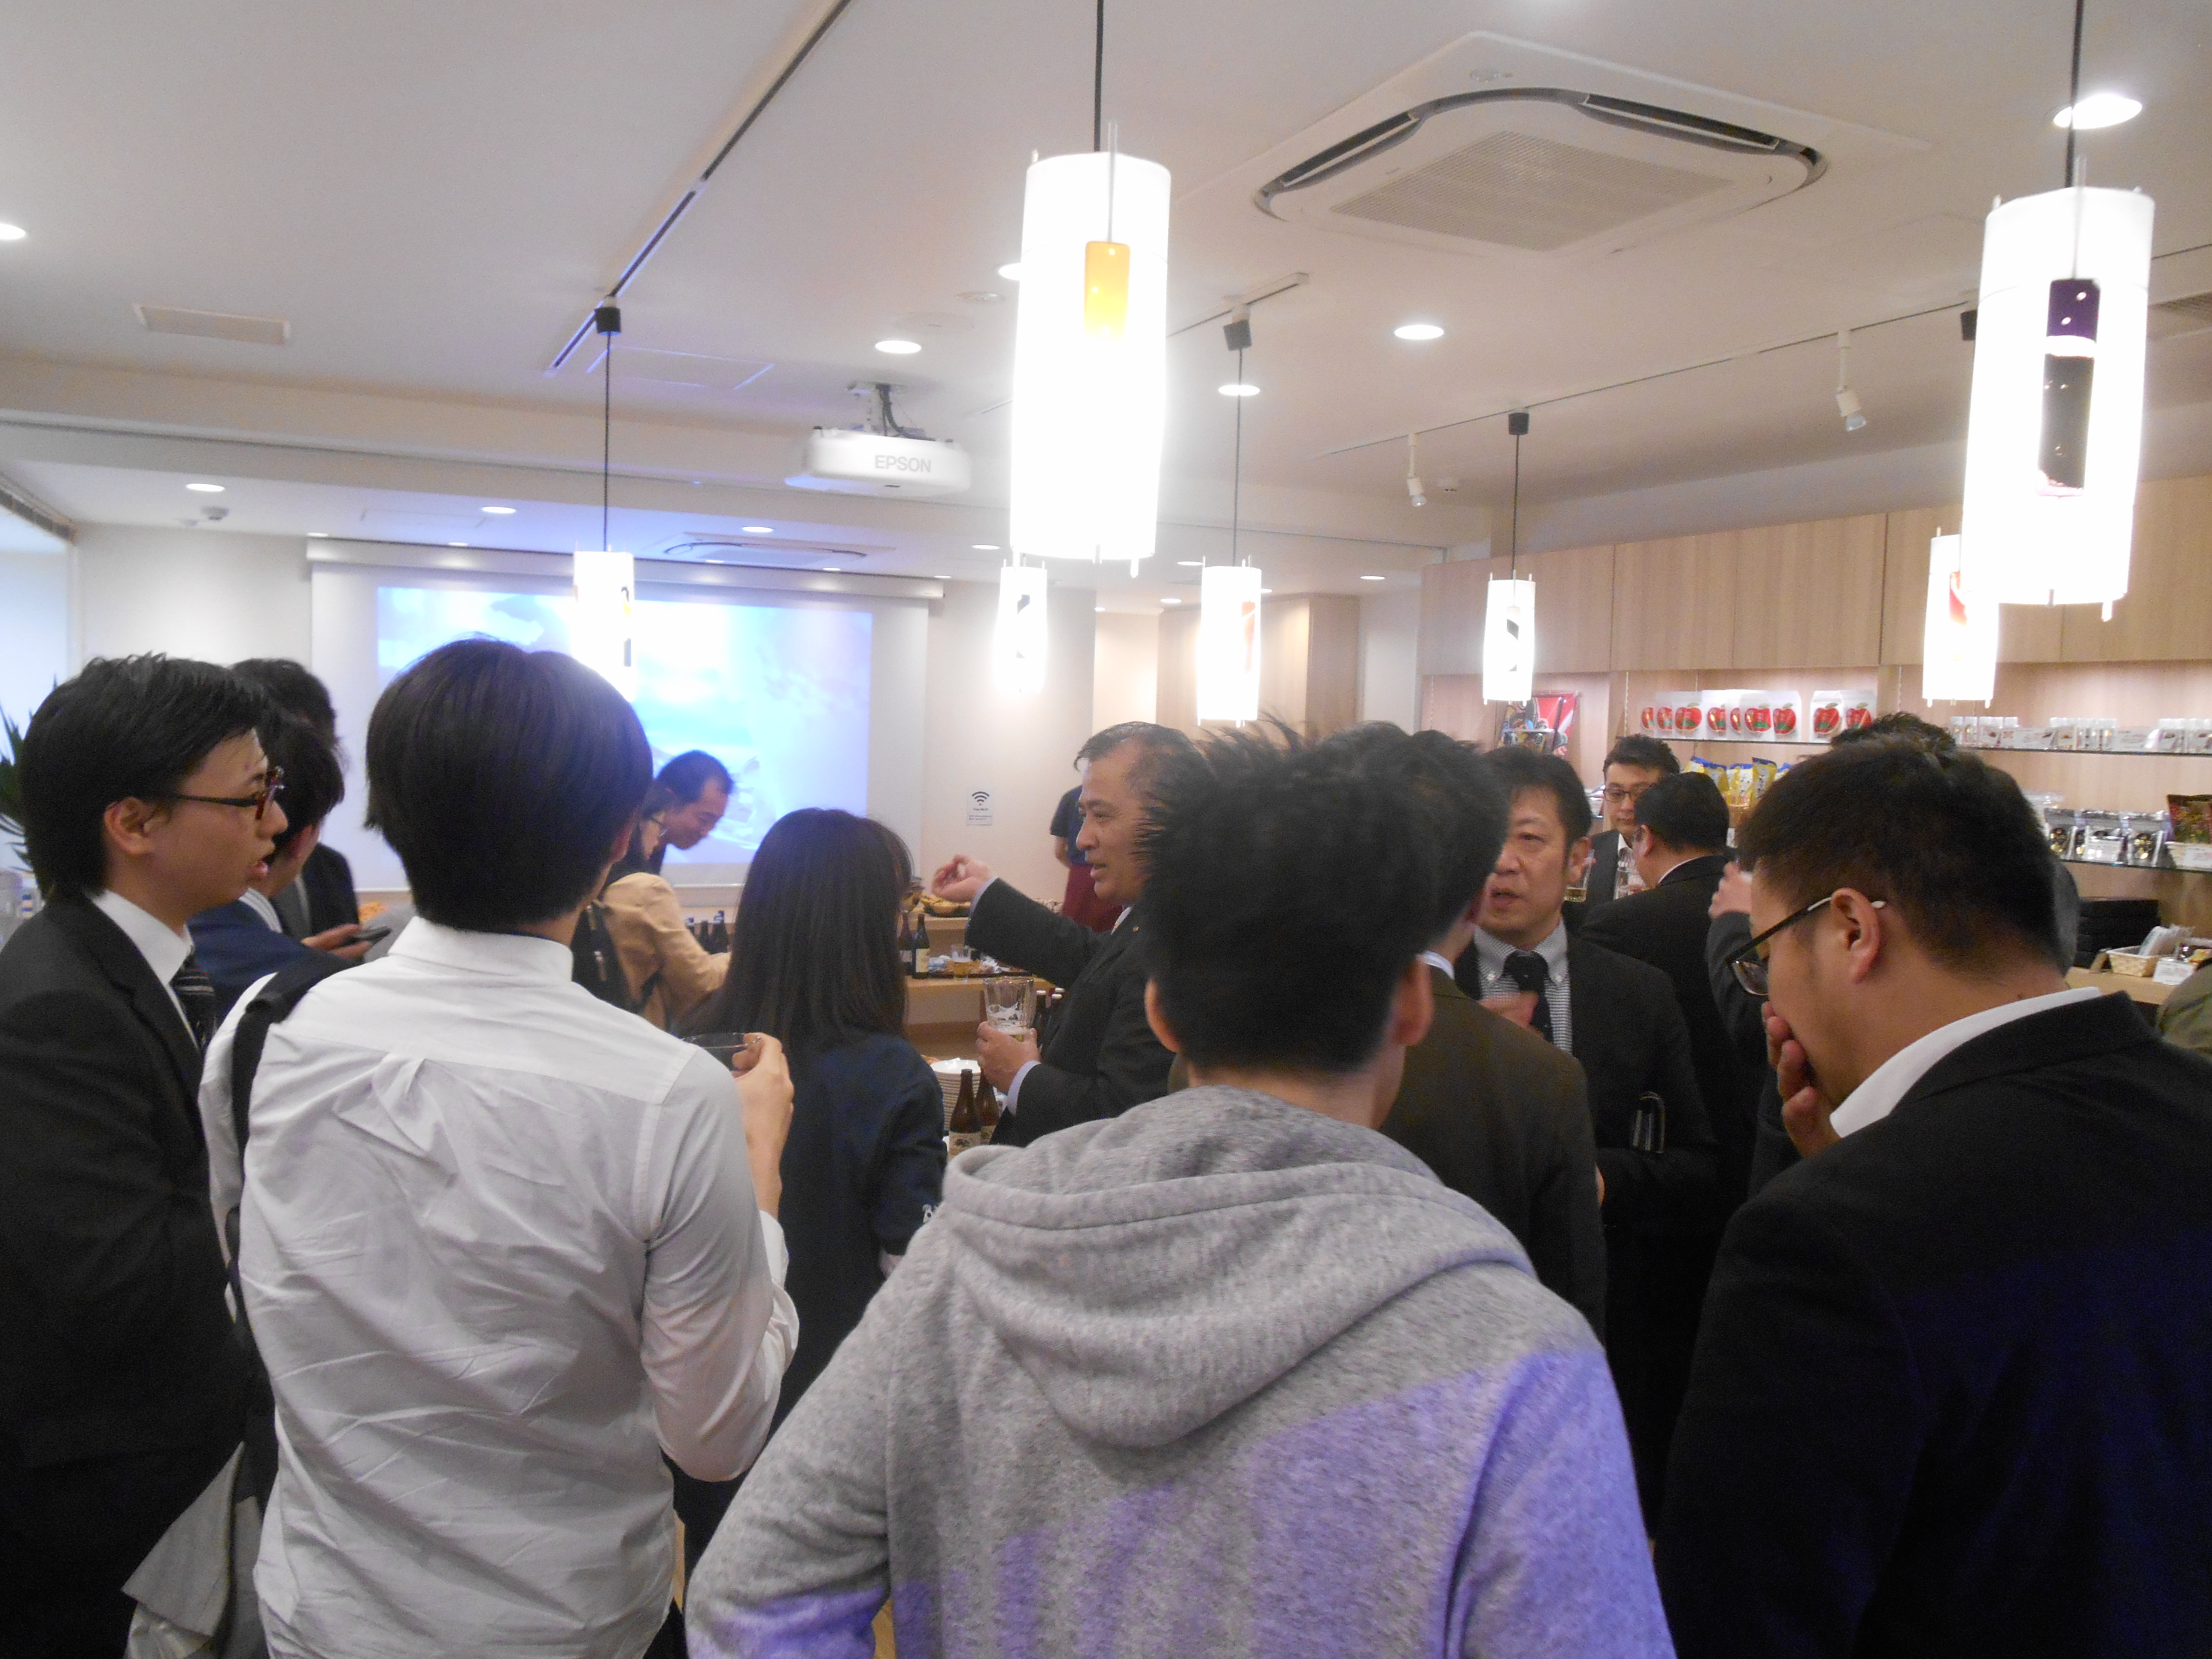 DSCN1597 - AoMoLink〜赤坂〜の第2回勉強会&交流会開催します。